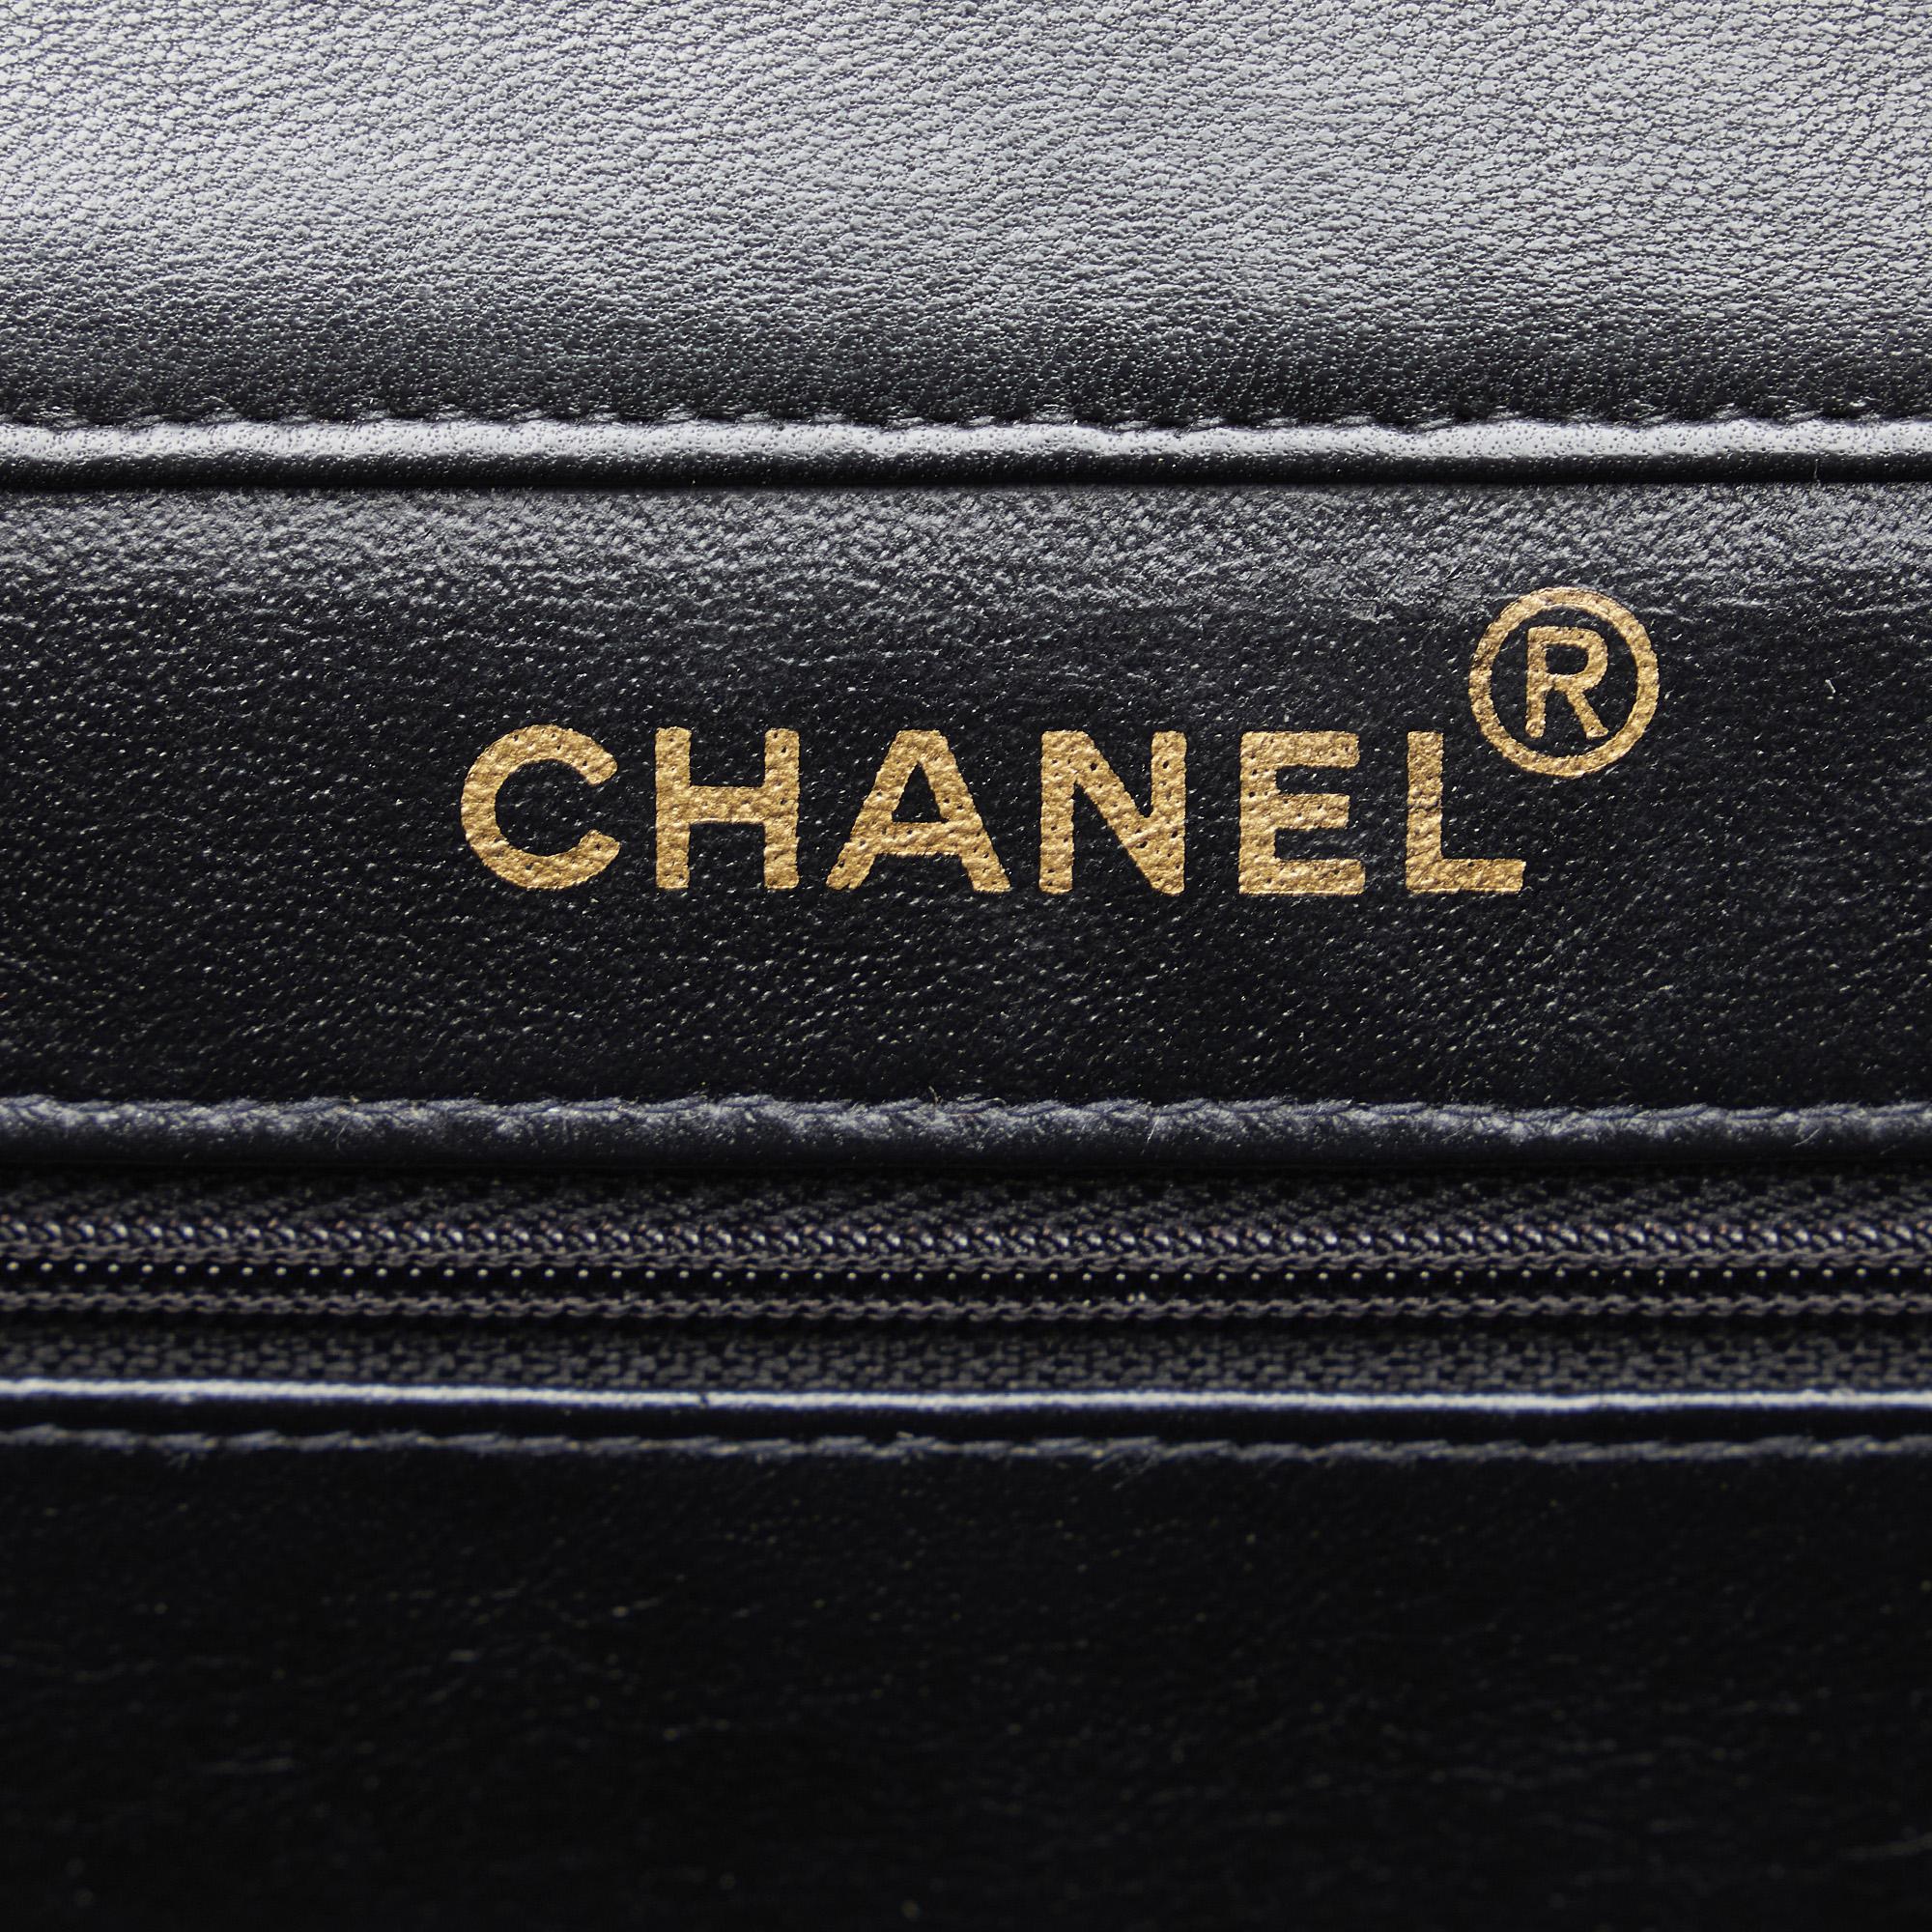 Chanel Black Jumbo Classic Lambskin Single Flap Bag